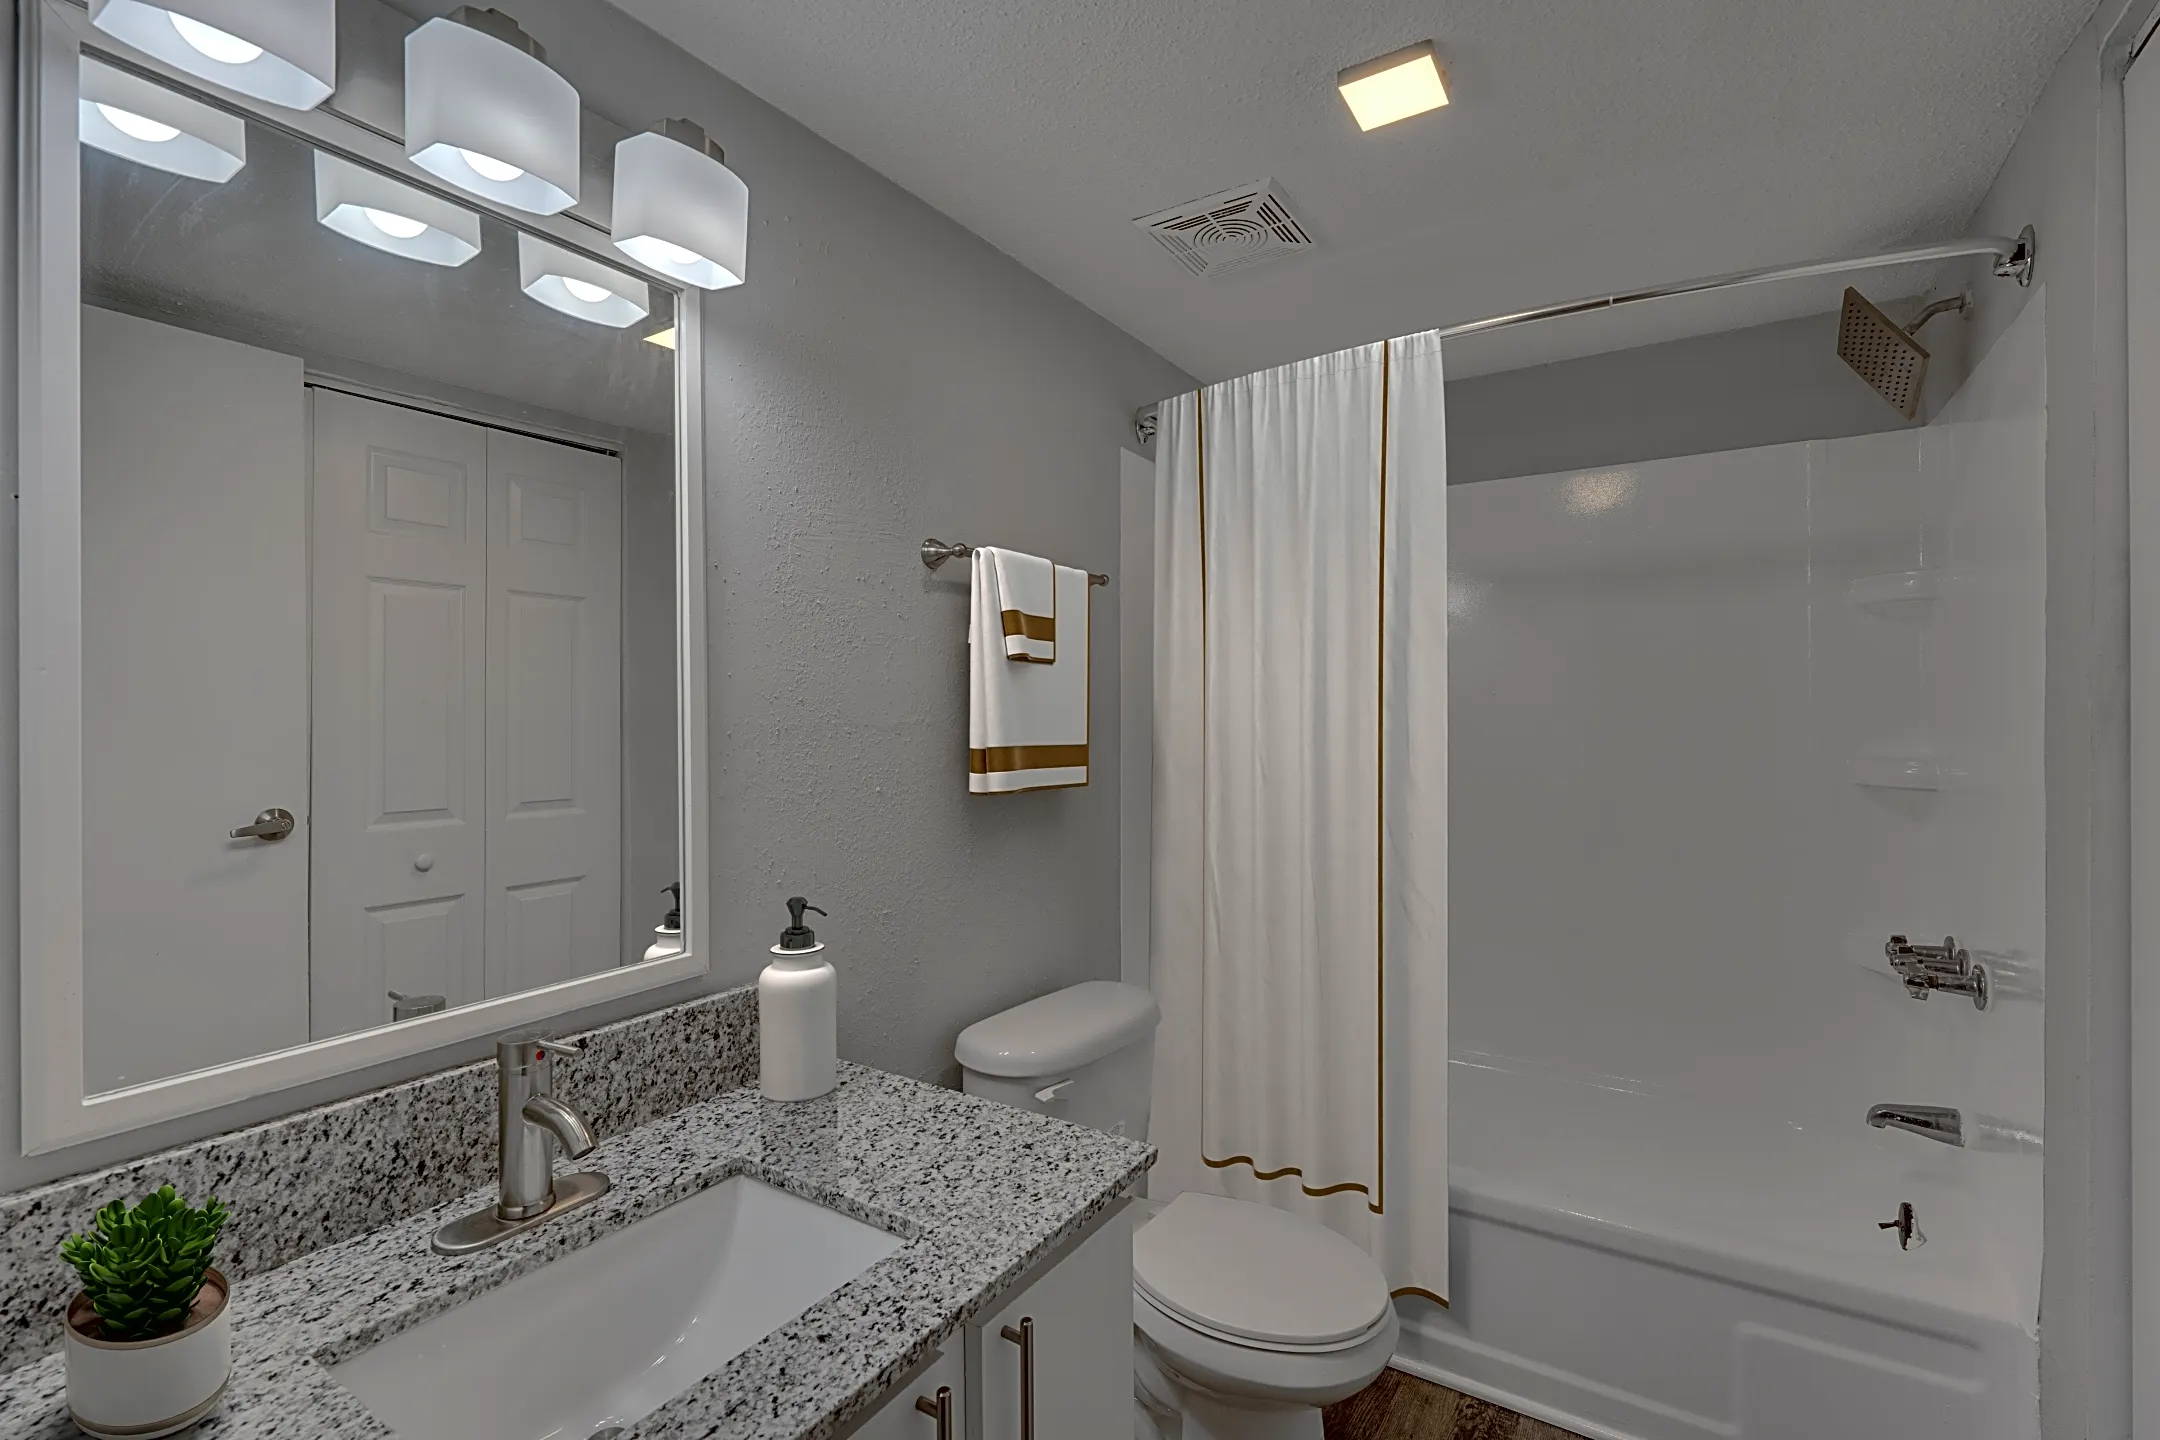 Bathroom - The Pointe Apartments - Burlington, NC